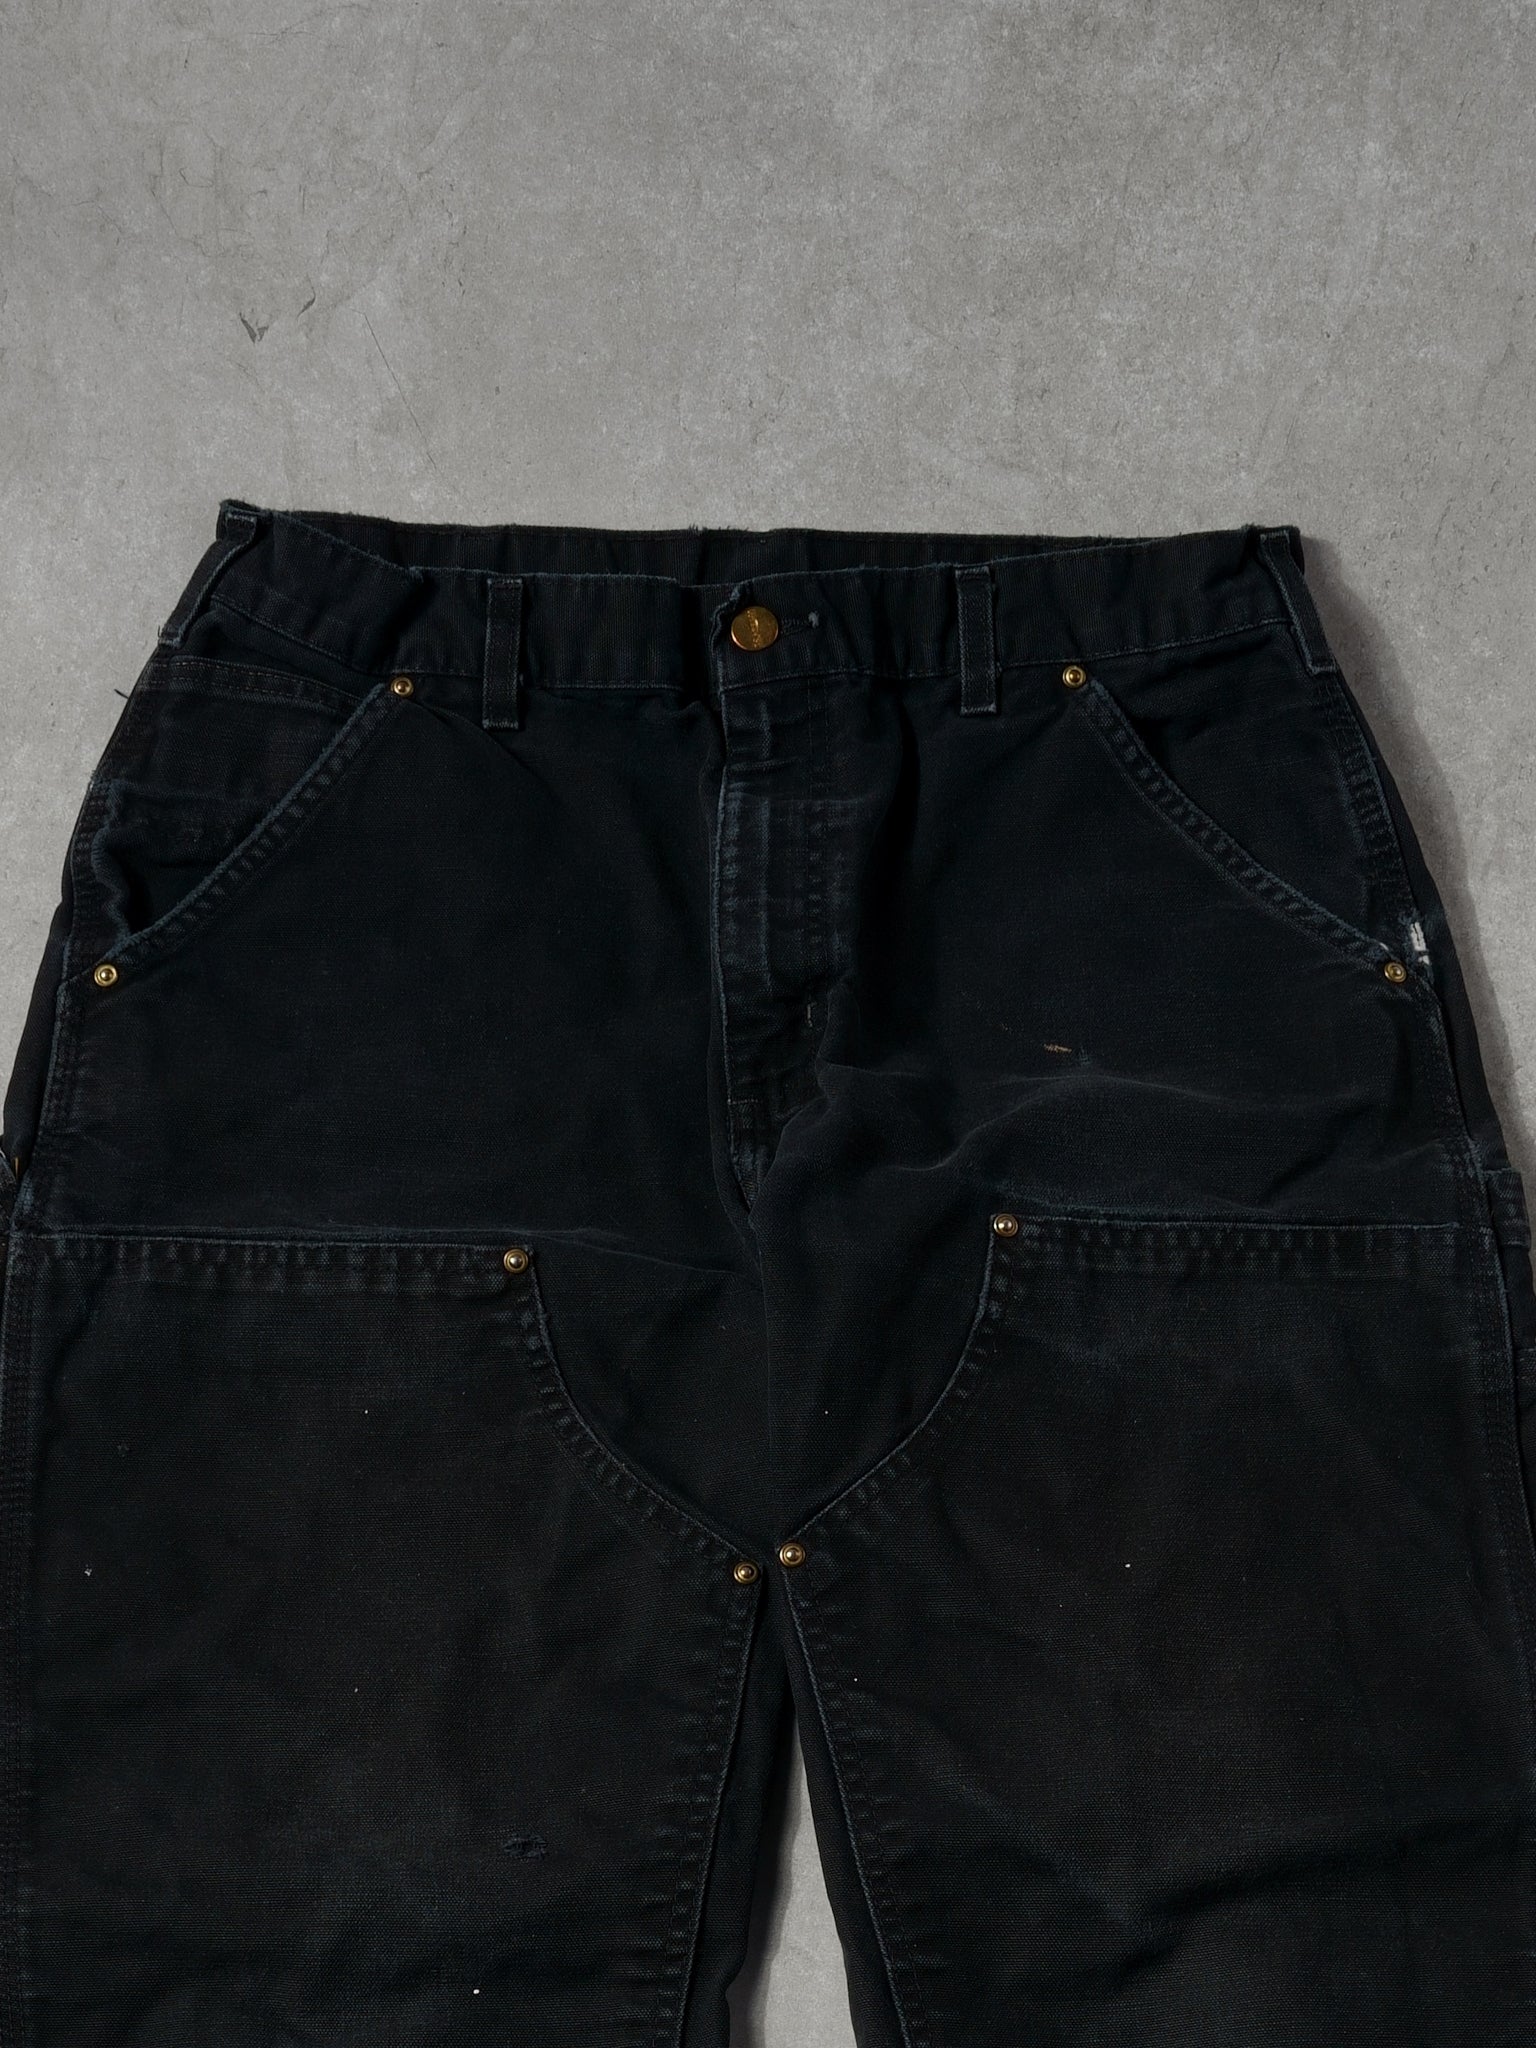 Vintage 90s Black Carhartt Double Knee Carpenter Pants (34x31)